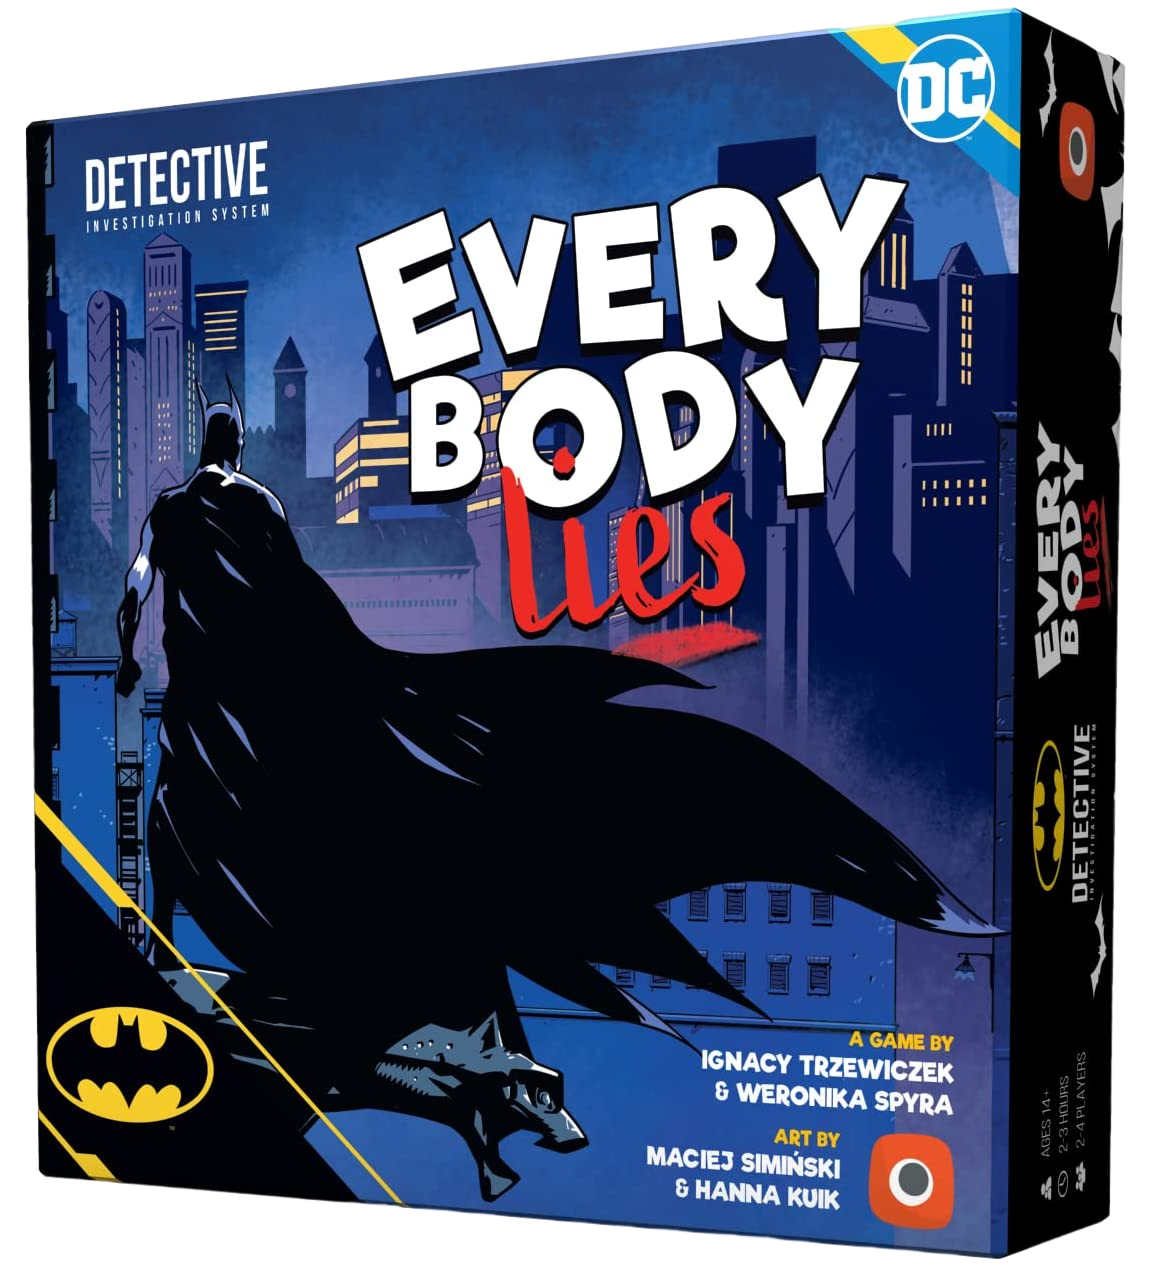 Detective: Batman - Everybody Lies